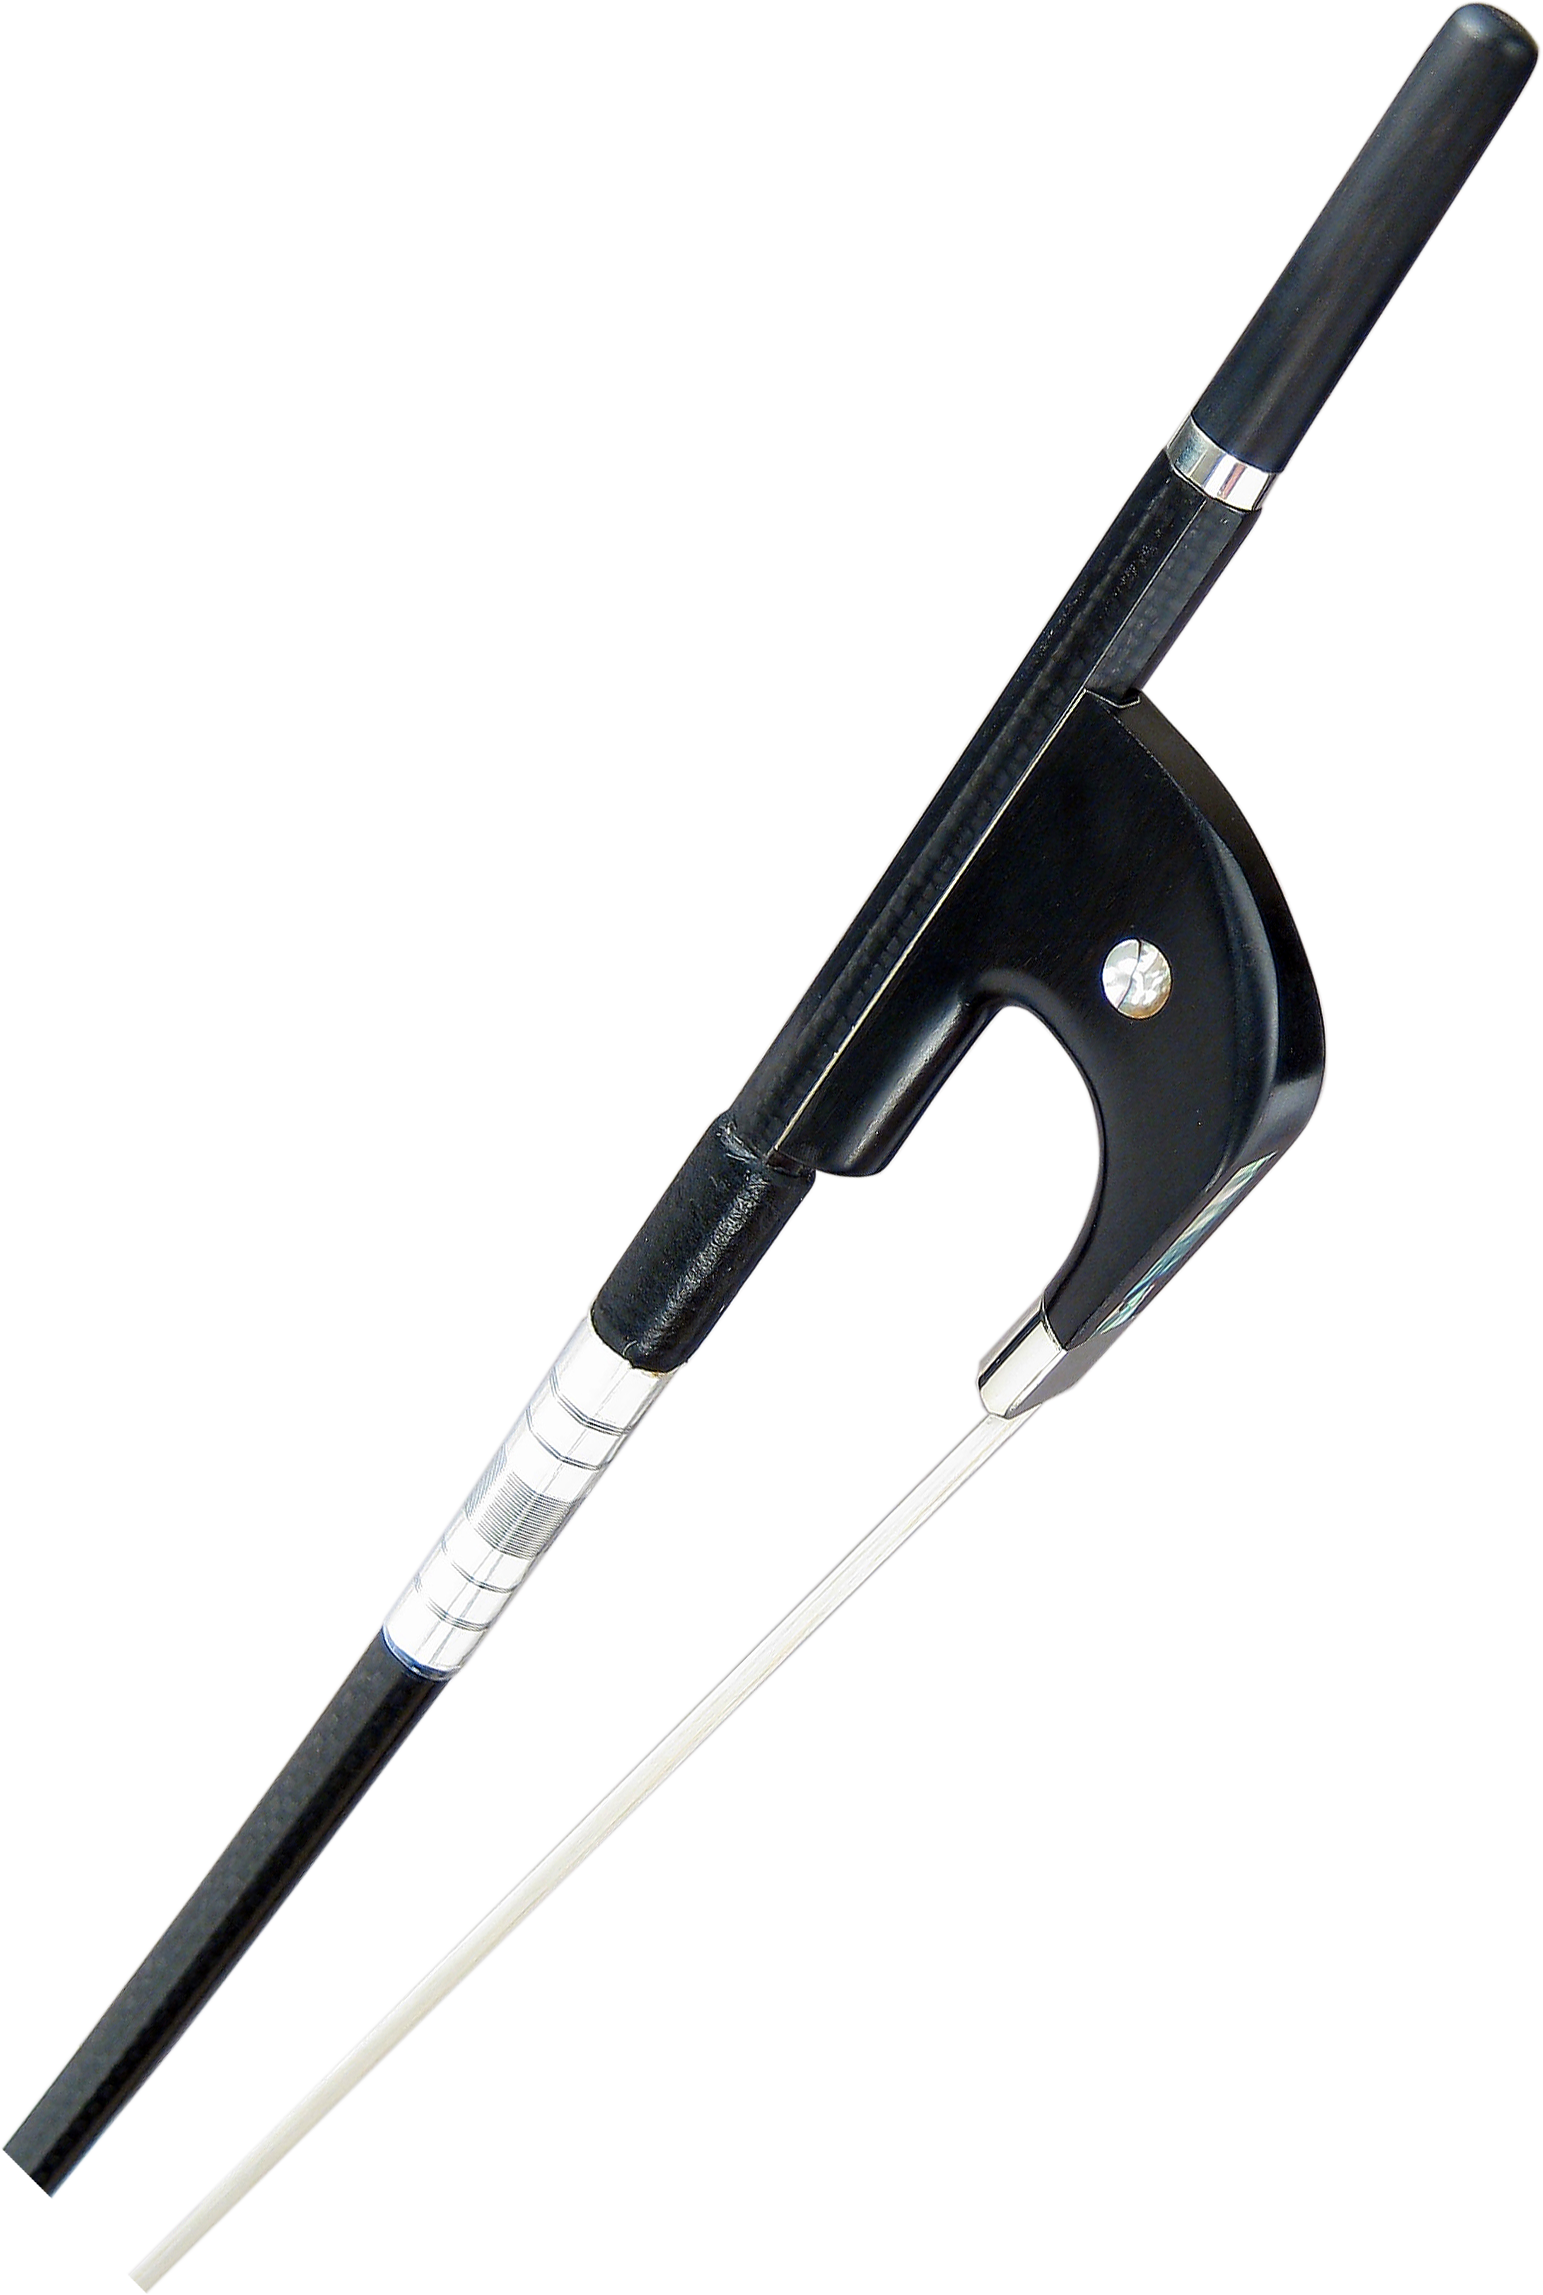 CSB204DB Core Black woven carbon fiber Bass Bow German Style String Power 